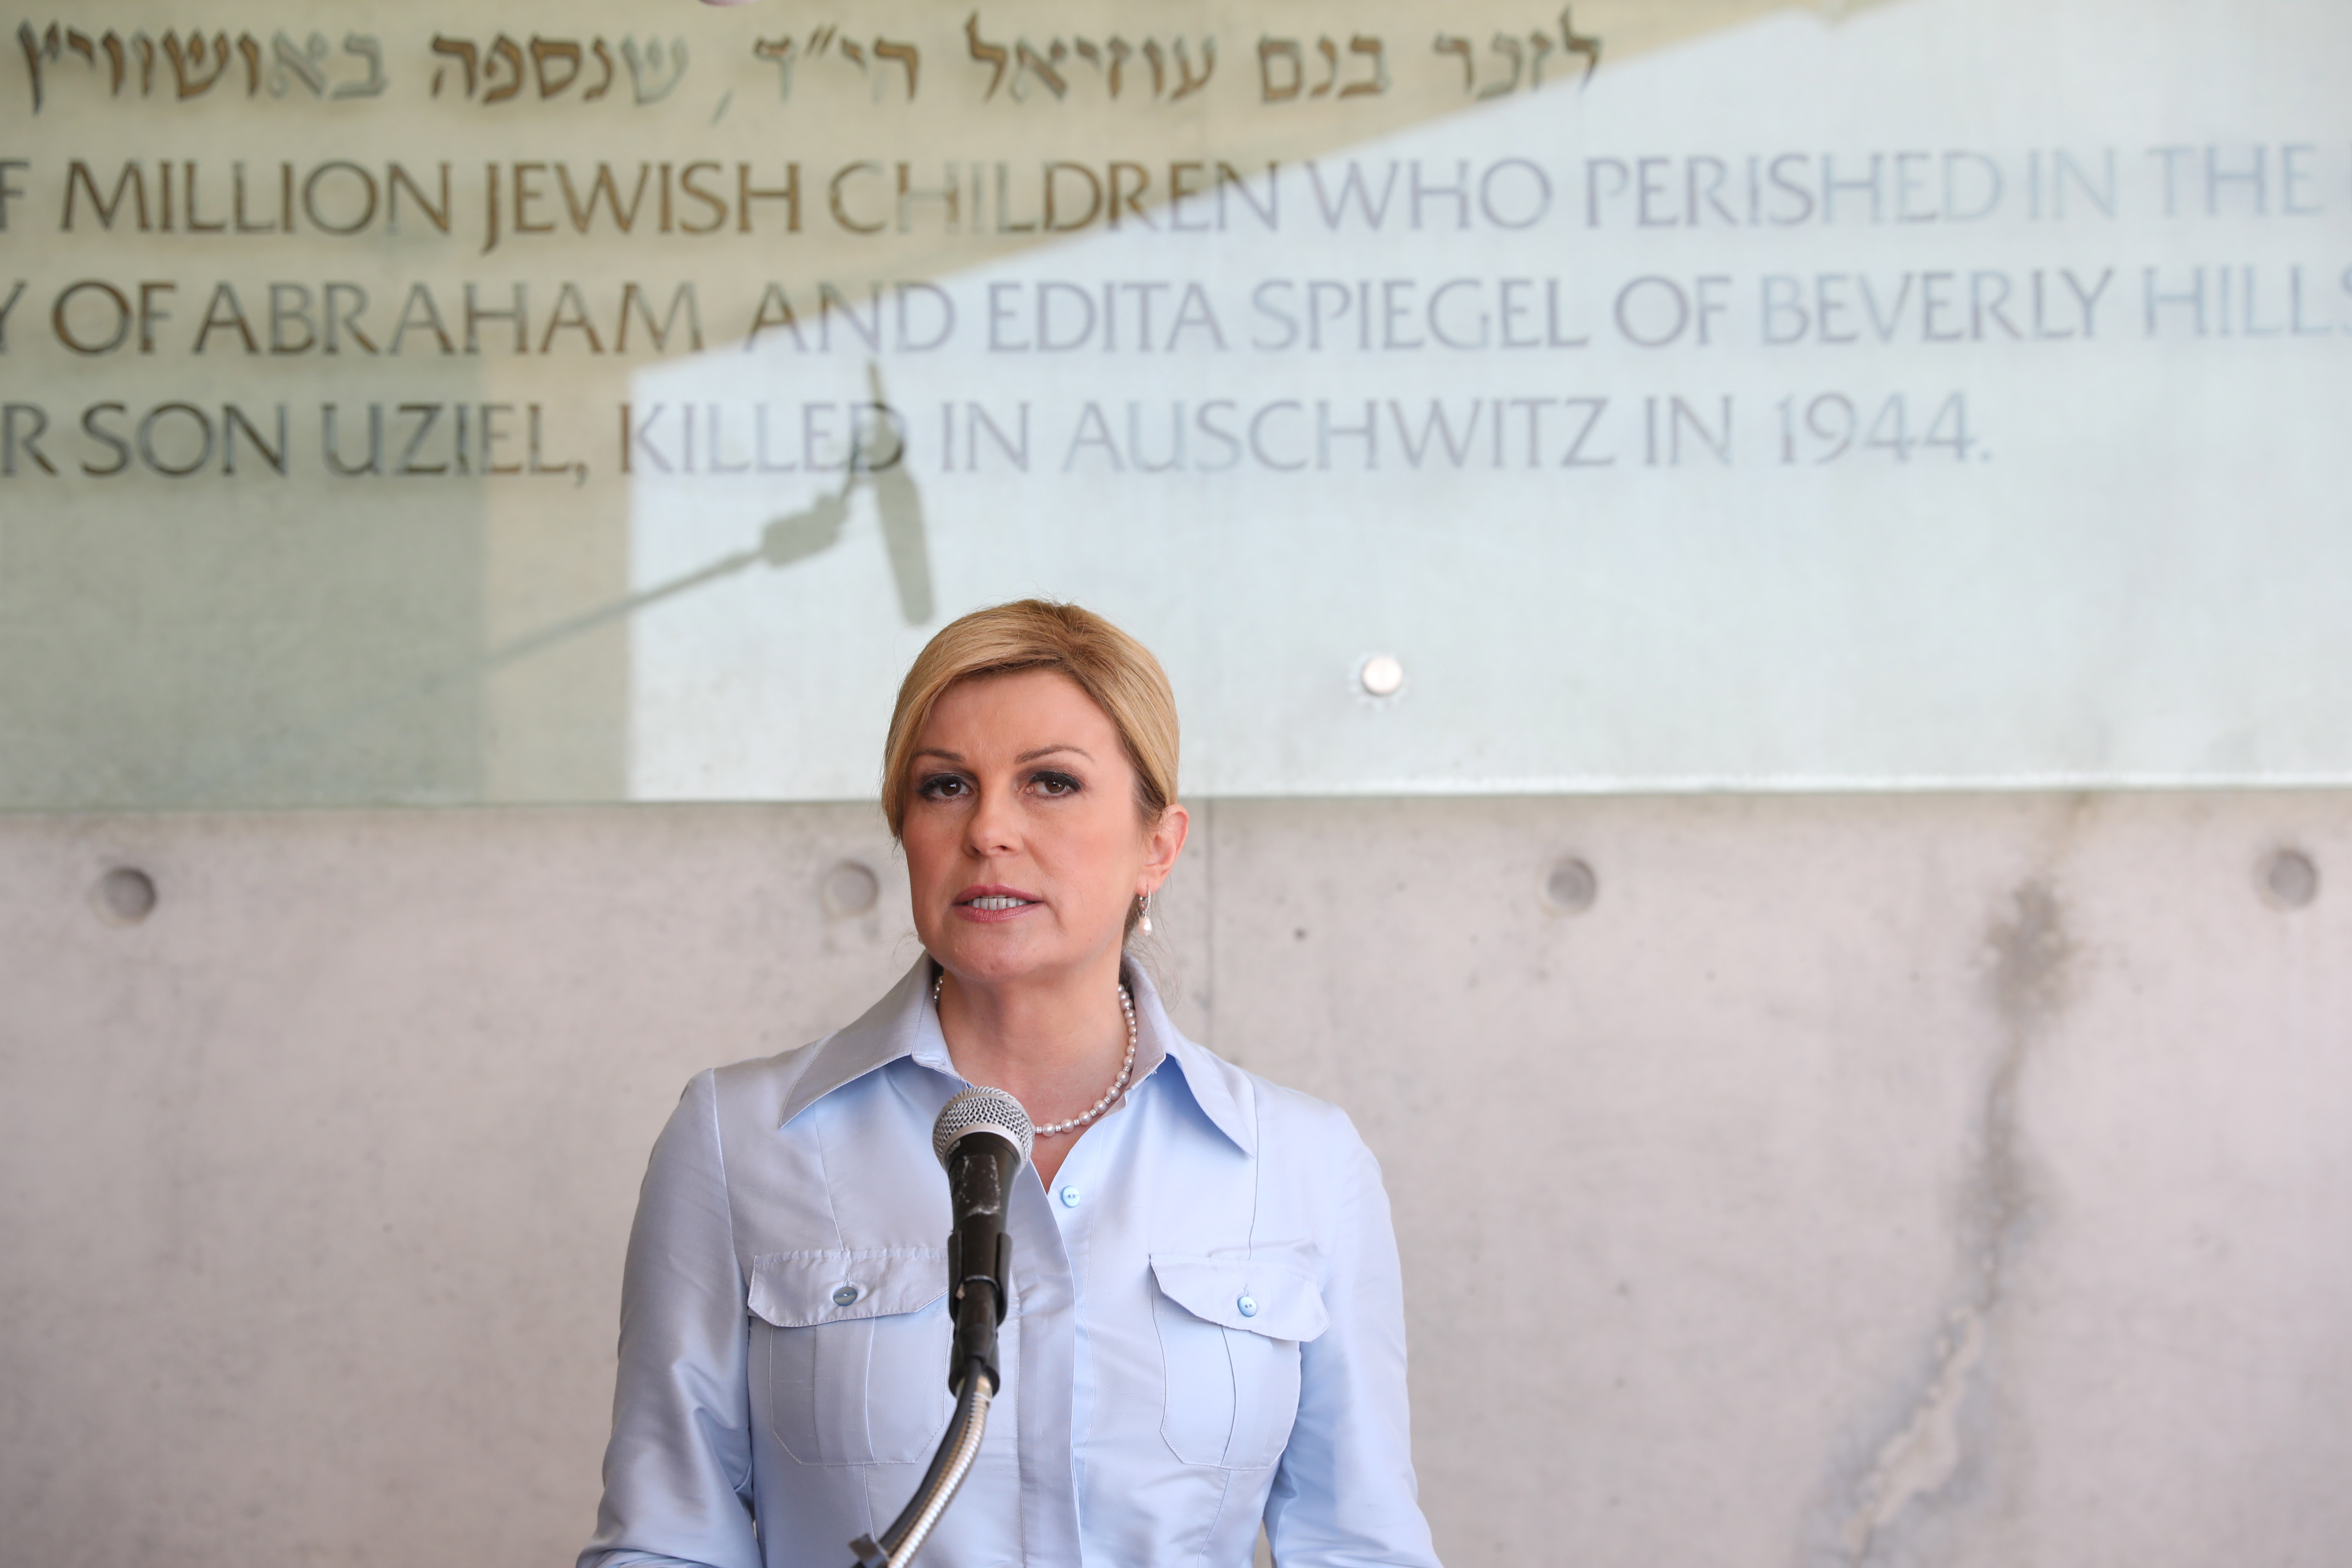 epa07747182 Croatian President Kolinda Grabar-Kitarovic speaks at the signing of the guest book in the Yad Vashem Holocaust memorial museum in Jerusalem, 29 July 2019.  EPA/ABIR SULTAN